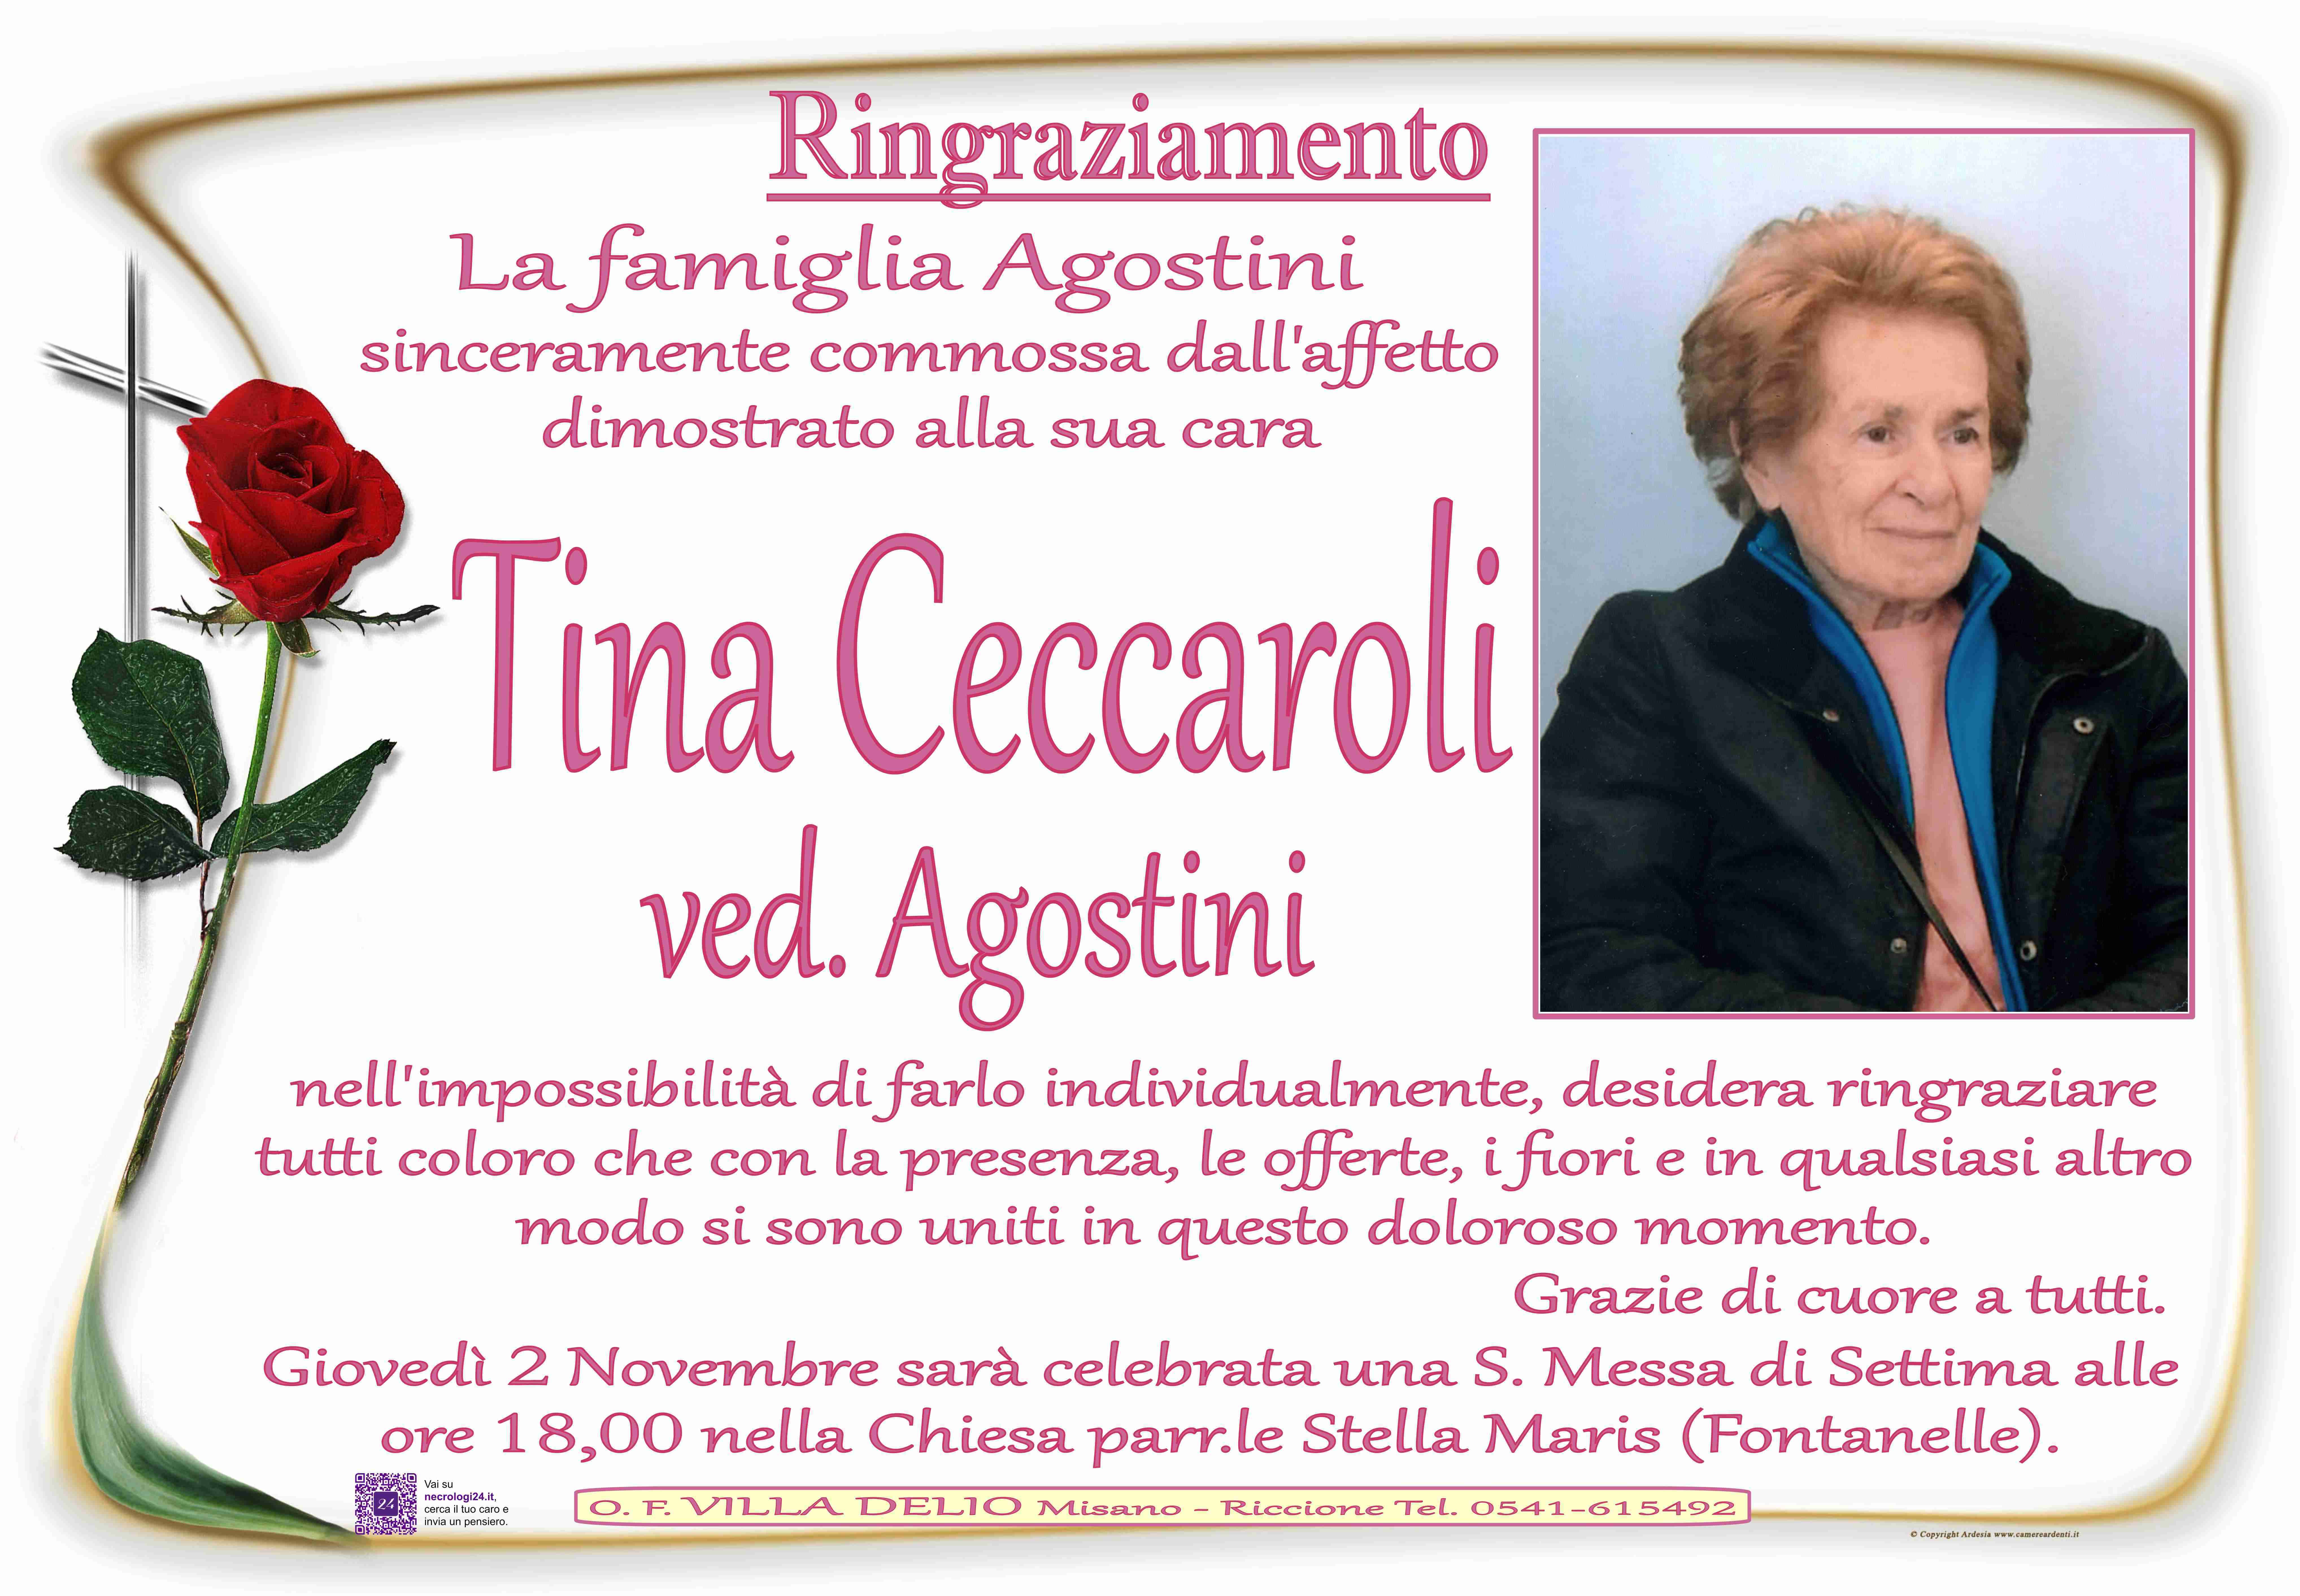 Tina Ceccaroli